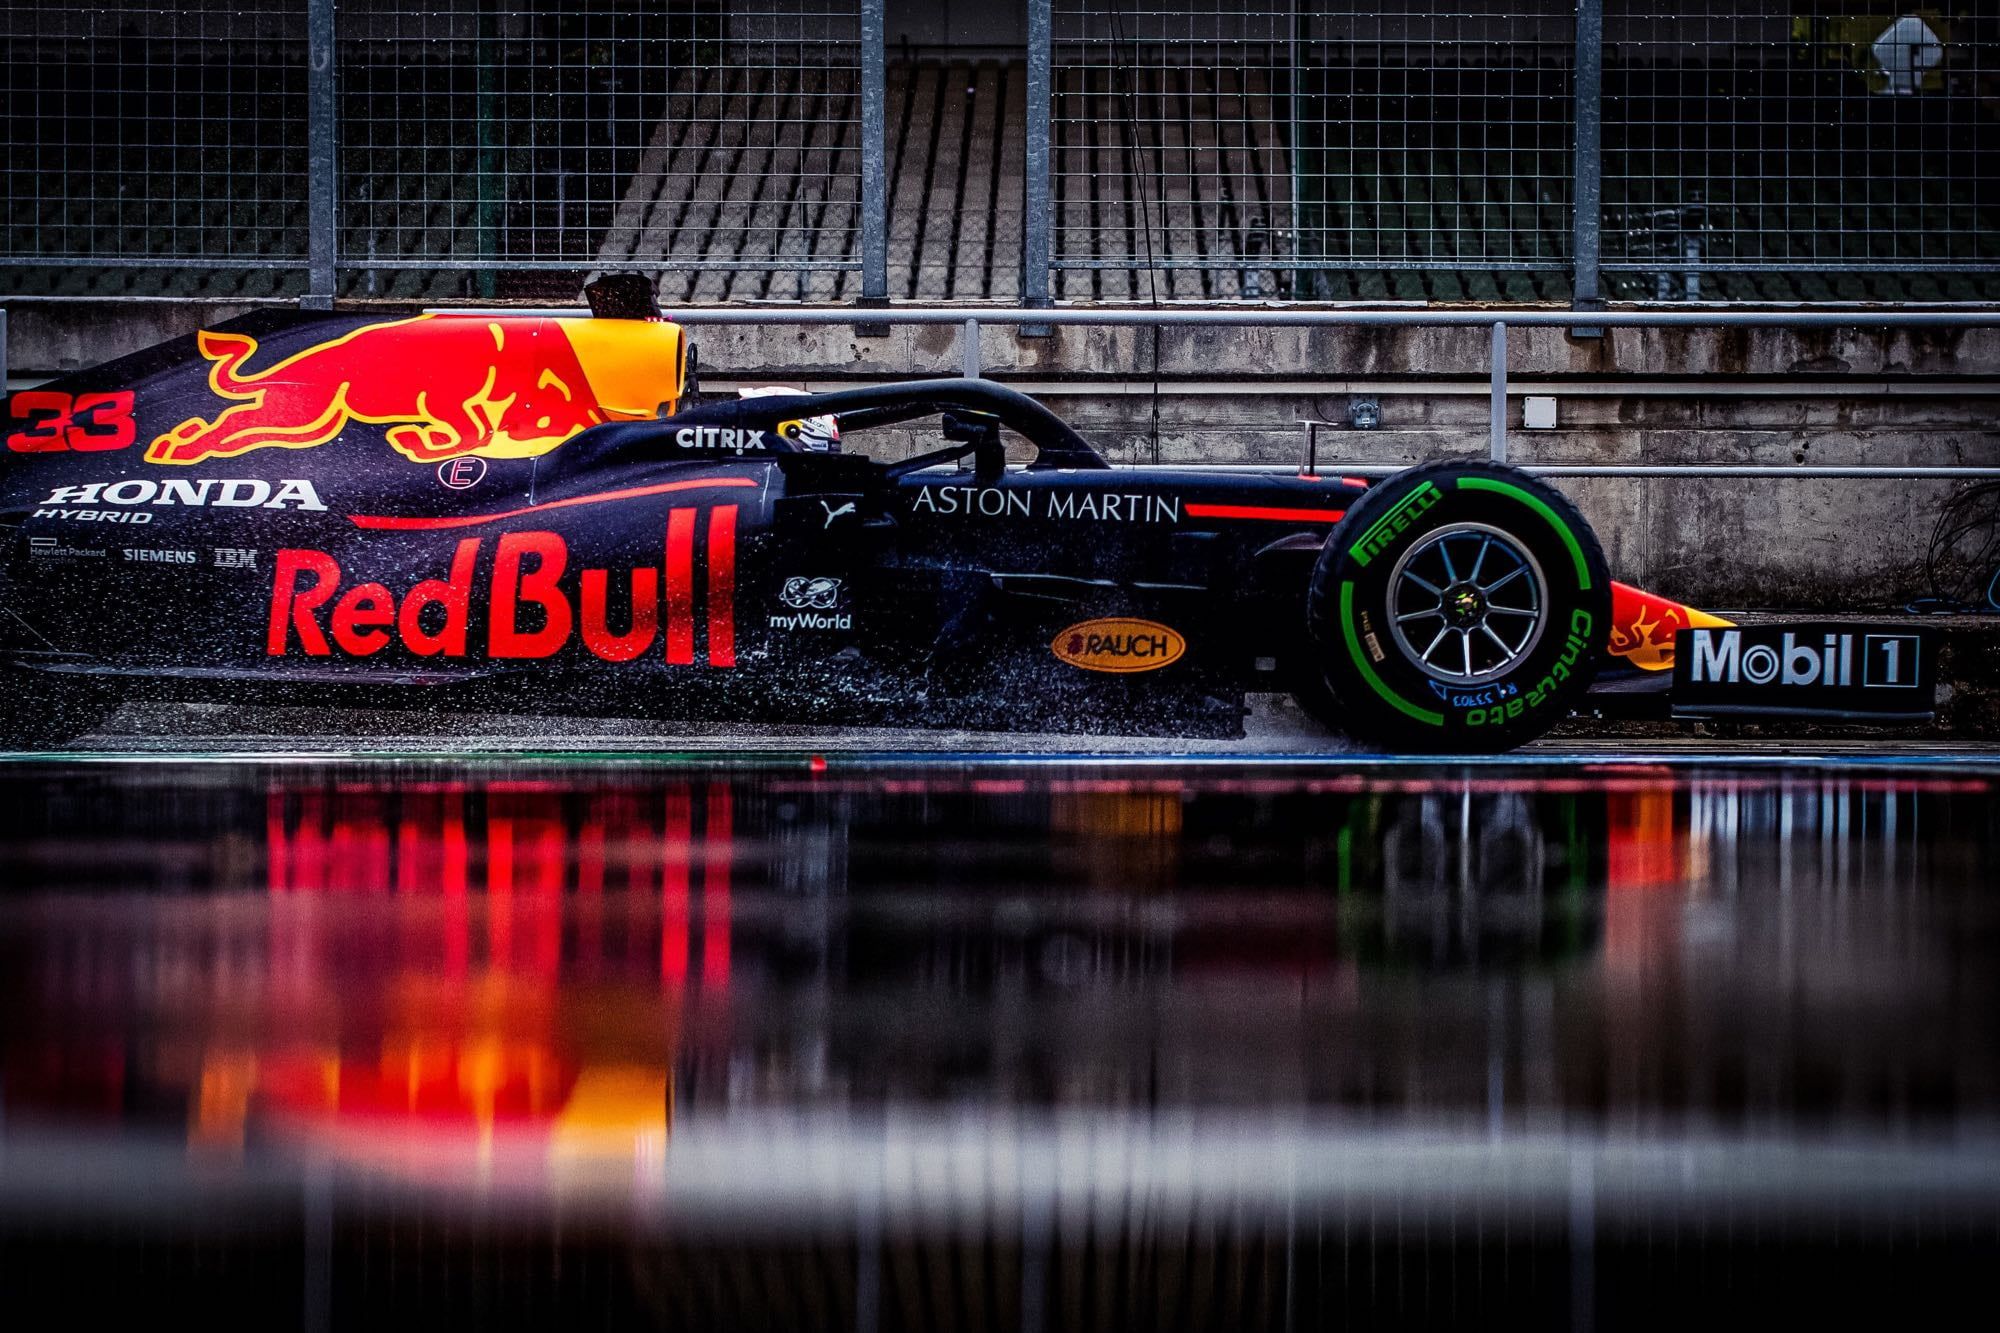 Red Bull Red Bull Racing Max Verstappen Aston Martin #Honda MOBIL 1 P # wallpaper #hdwallpaper #desktop. Red bull racing, Red bull f Max verstappen